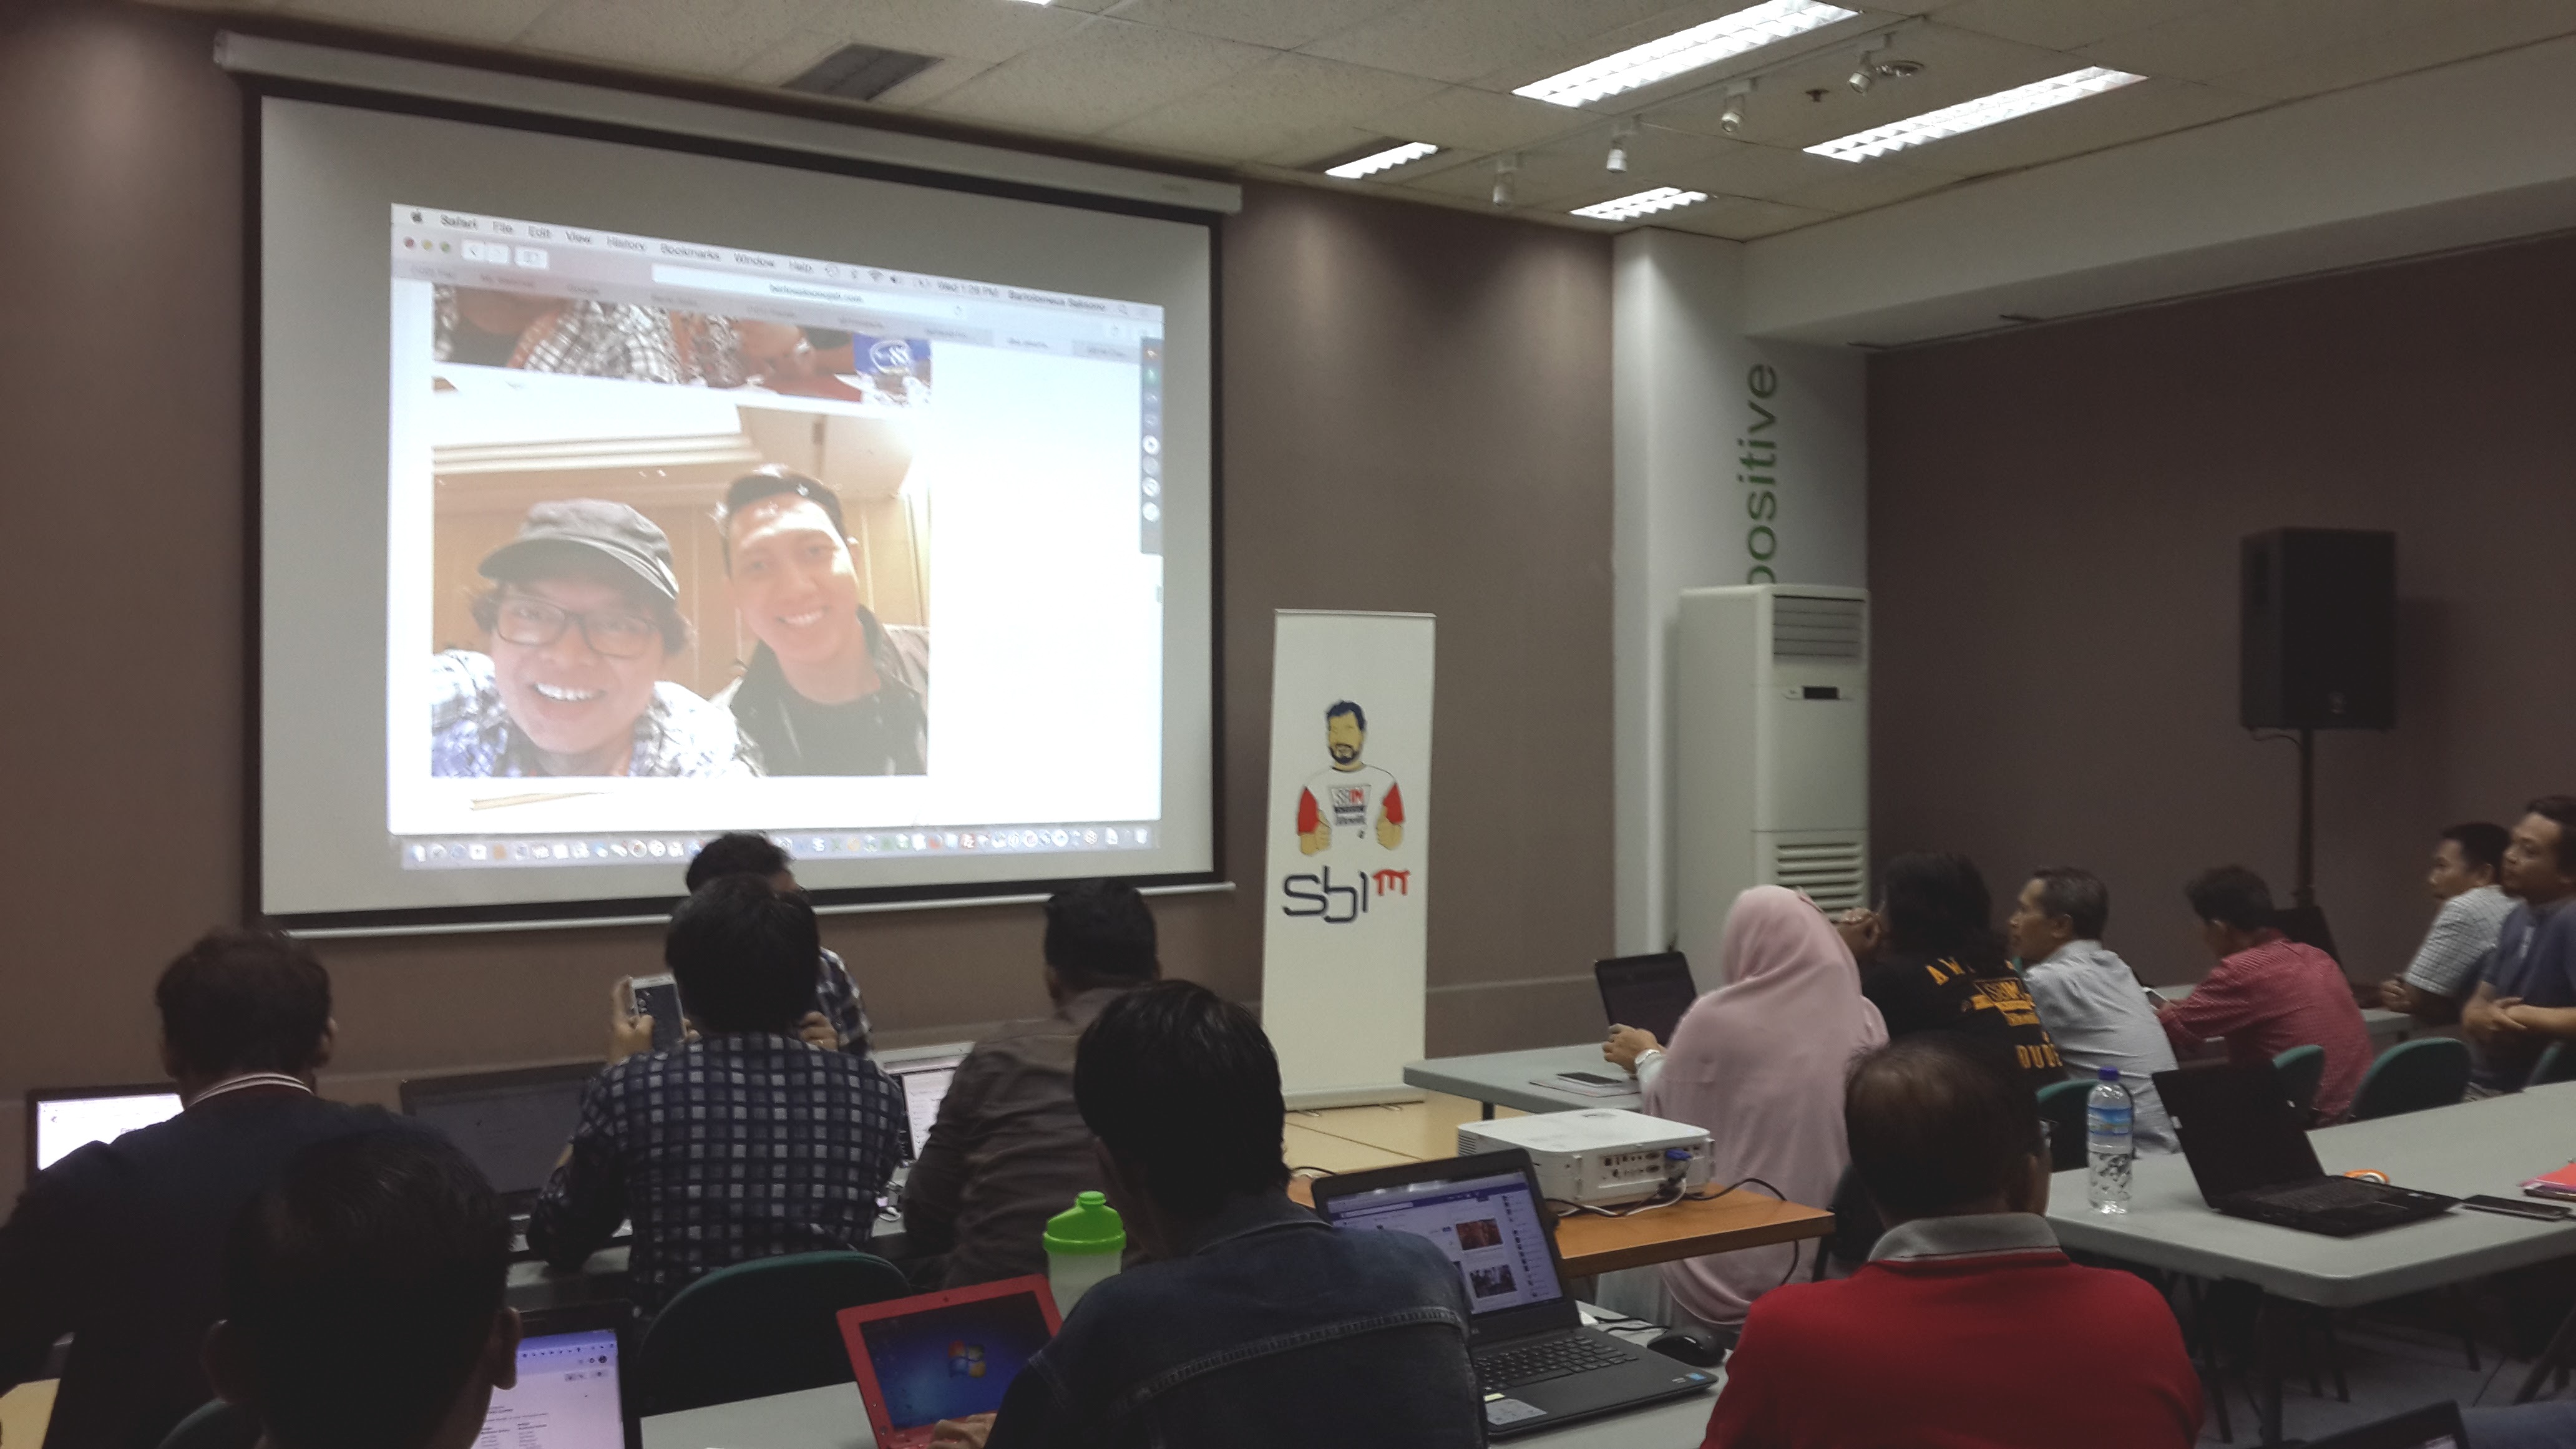 Daftar Kursus Belajar Bisnis Online Dan Internet Marketing Komunitas SB1M Jakarta